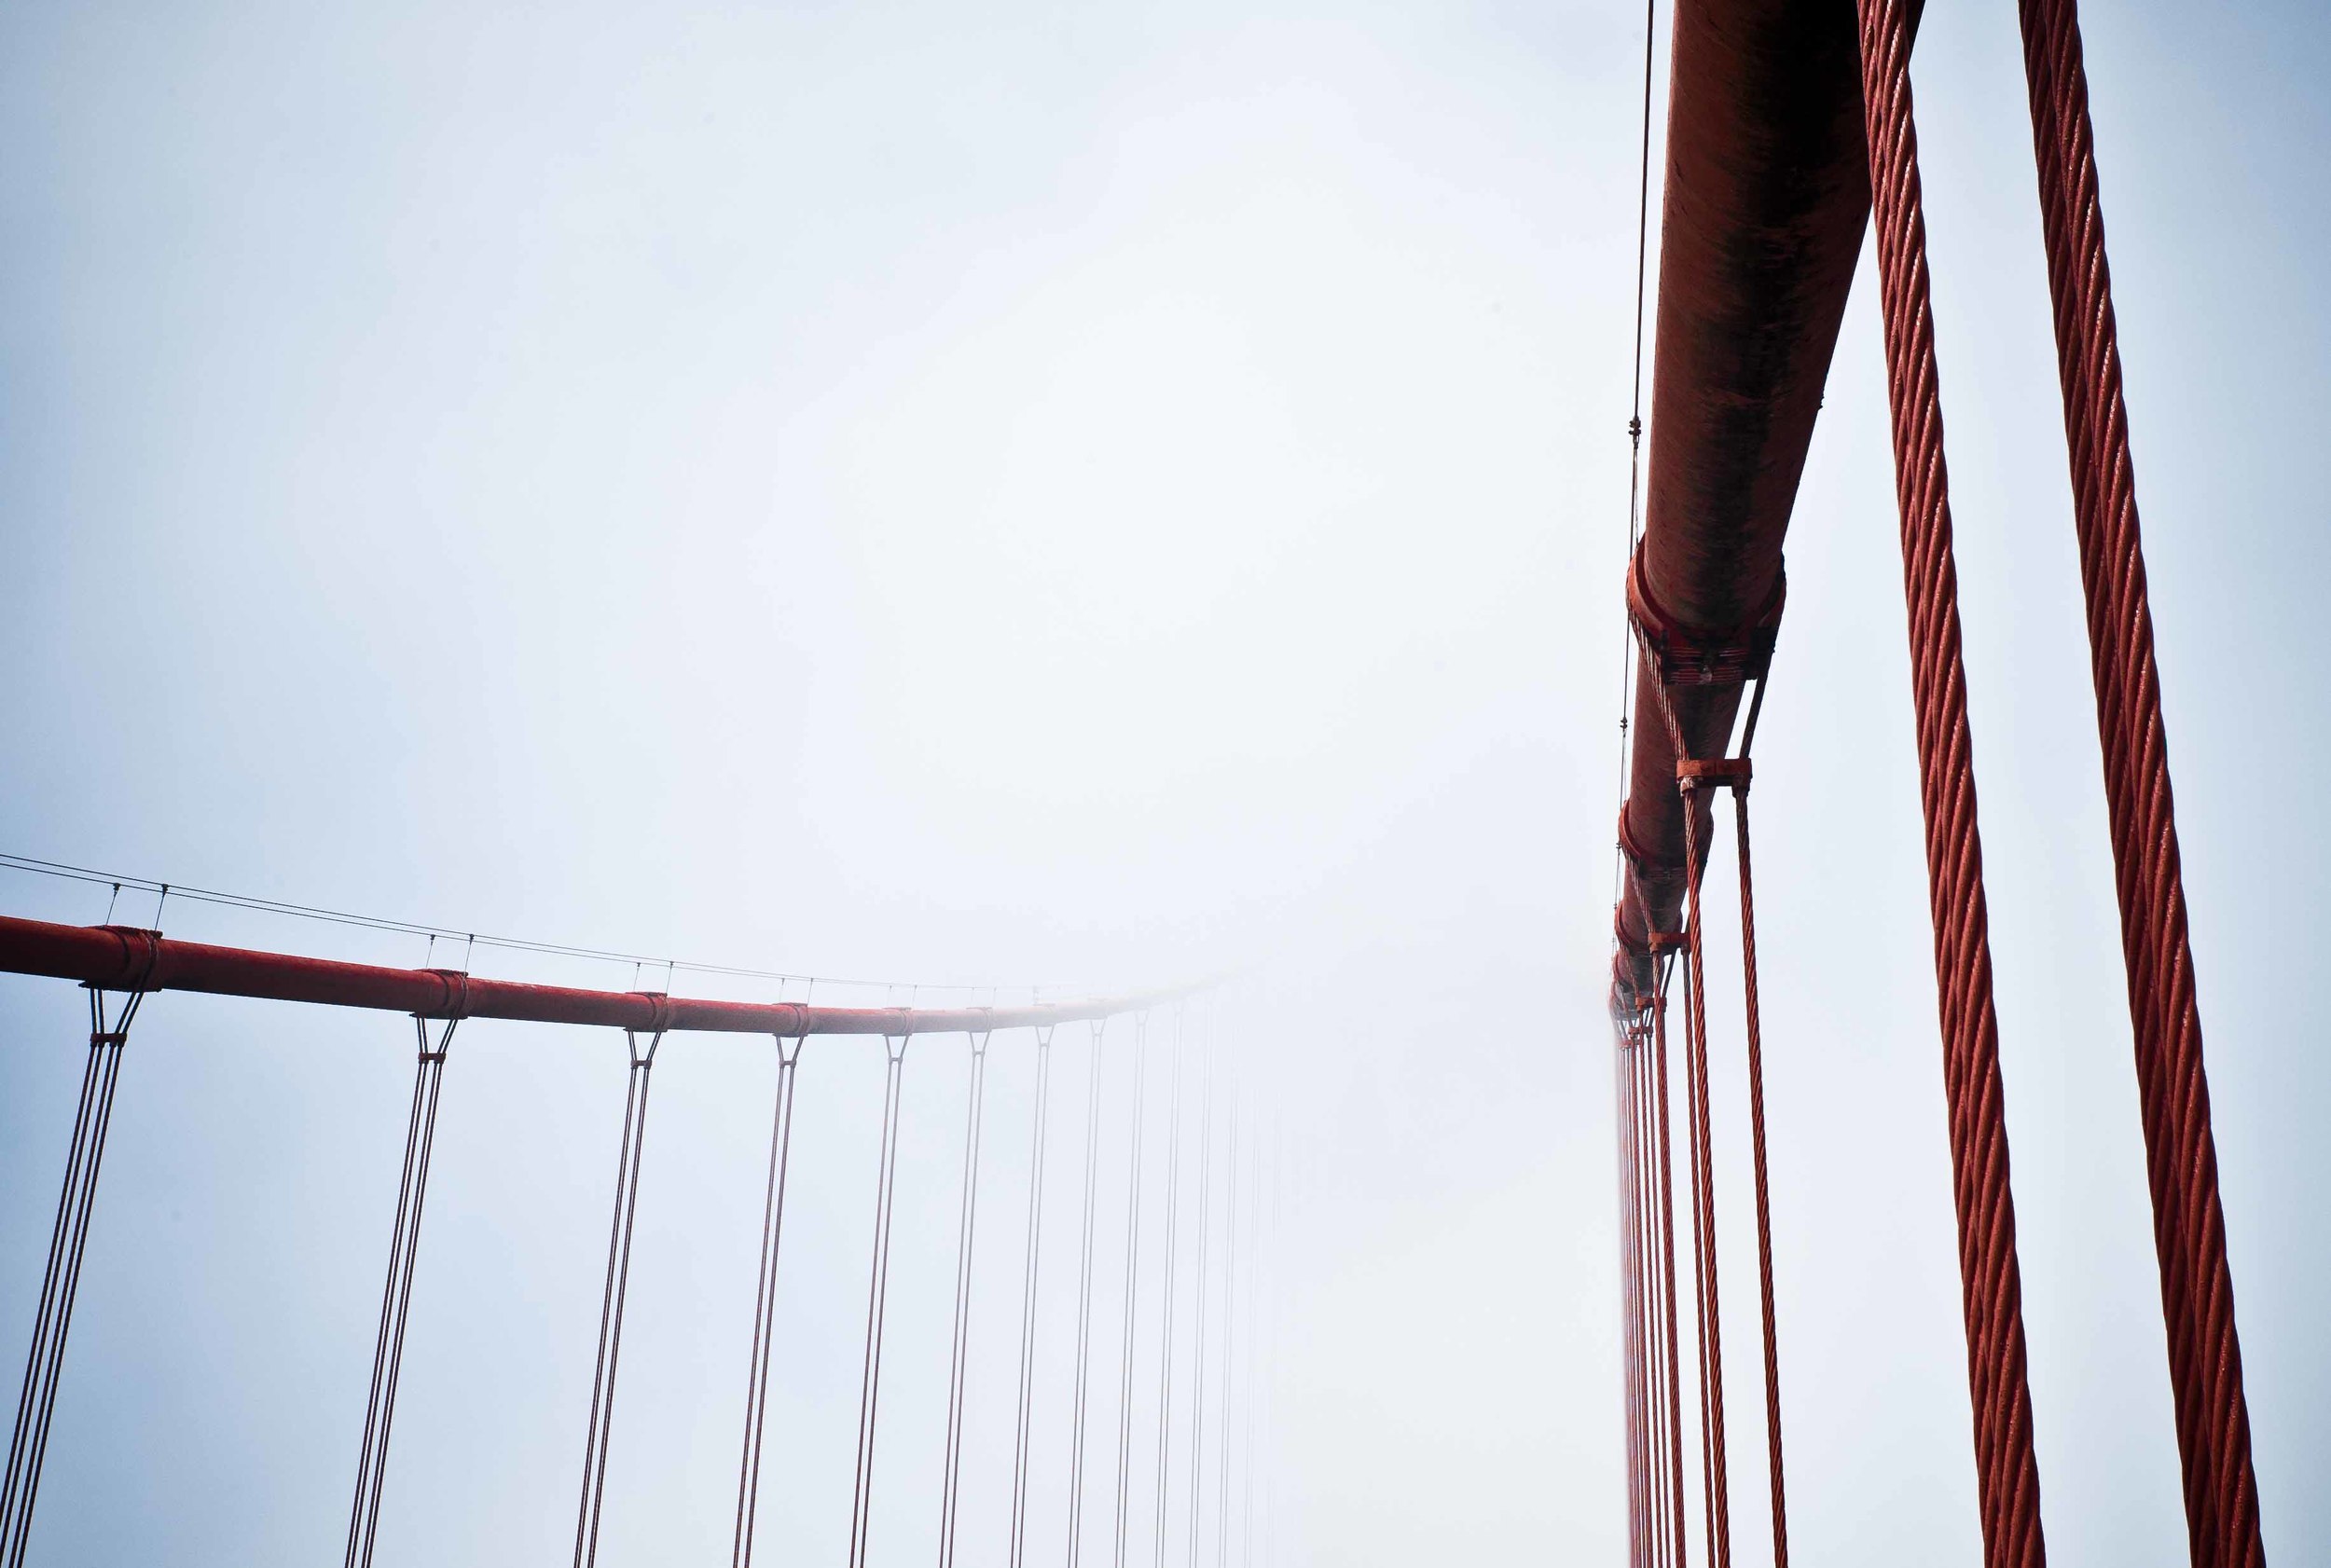 Golden Gate Bridge (USA, 2013)